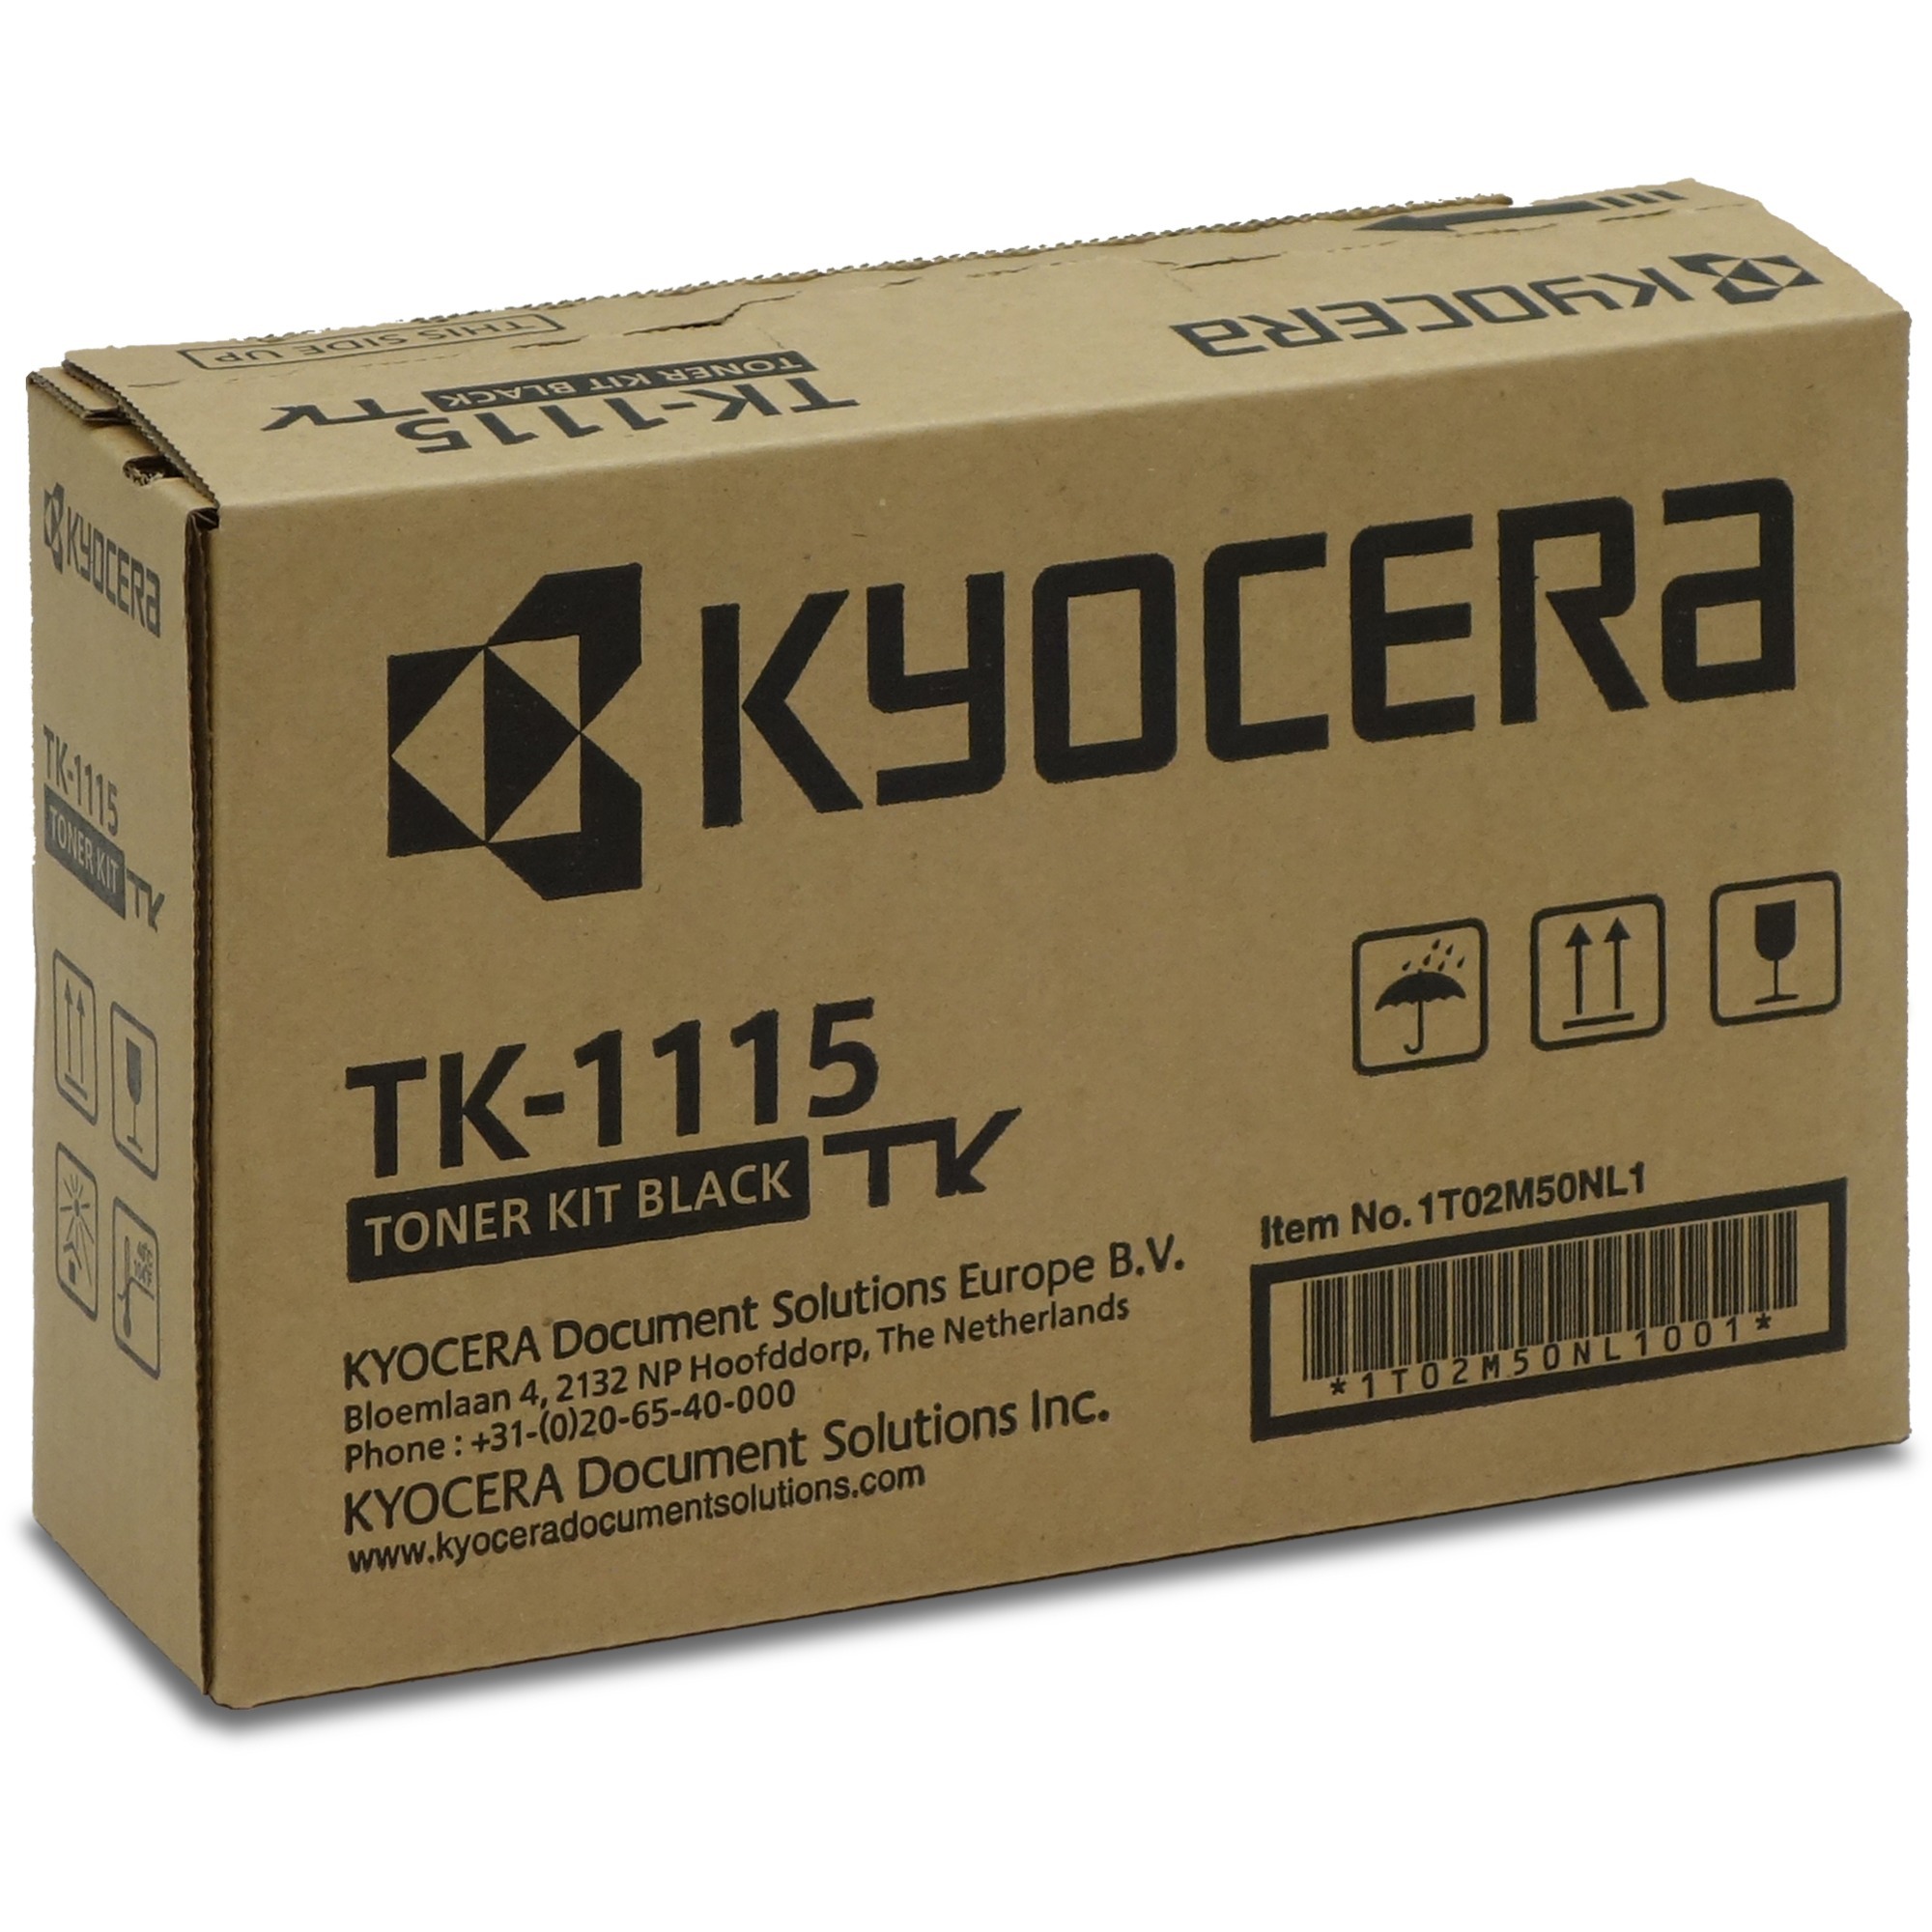 Тонер для принтера kyocera. Kyocera tk-1110. Картридж Kyocera tk-1110. Тонер Kyocera tk-1110. Тонер-картридж tk-1110 2 500 стр. Для FS-1040/1020mfp/1120mfp.